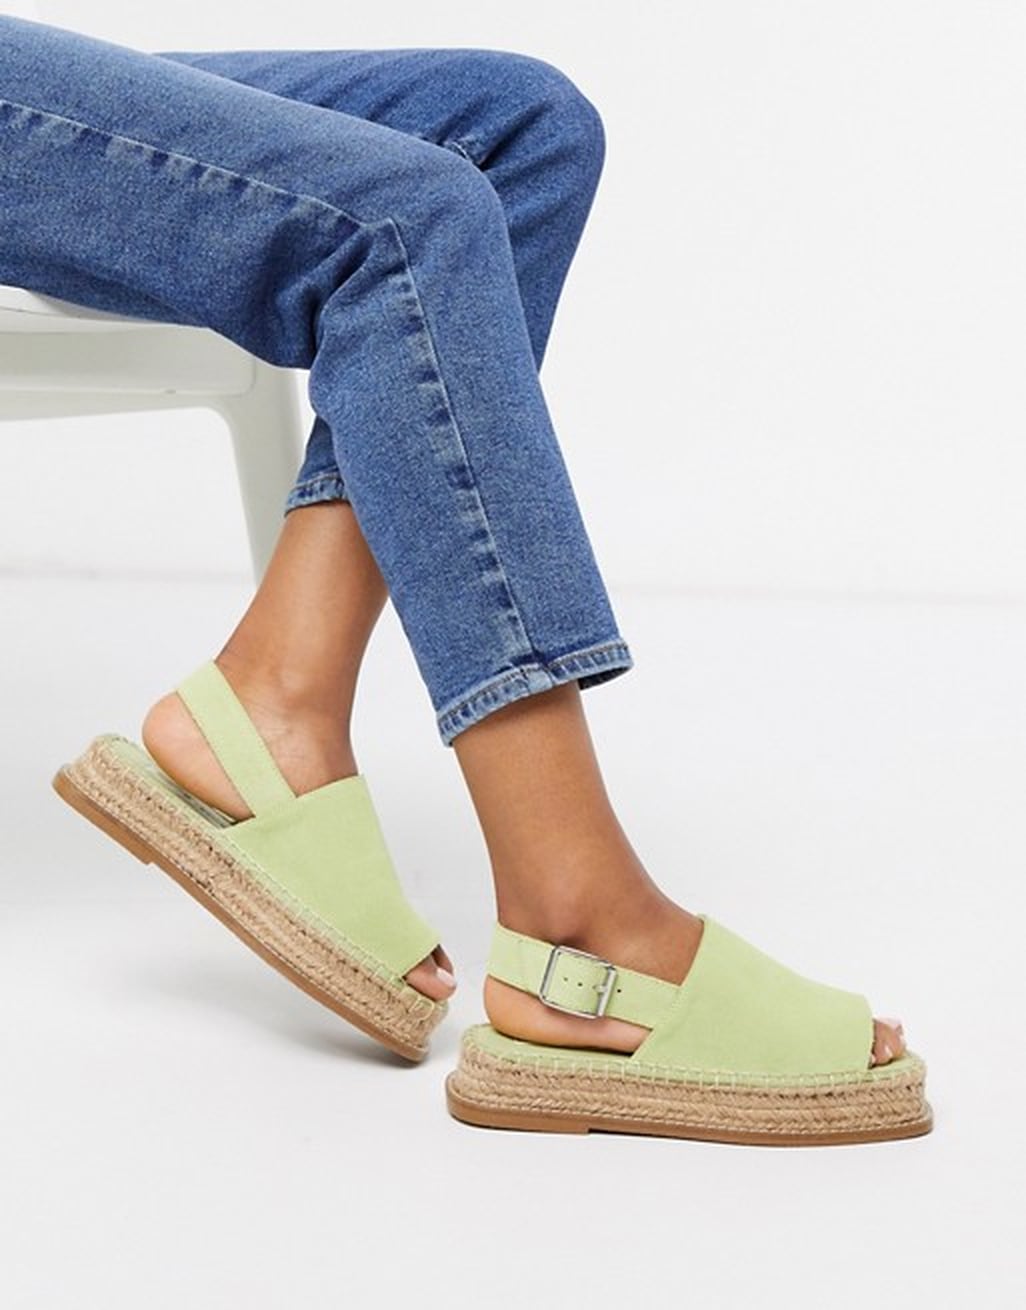 Most Comfortable Sandals 2020 | POPSUGAR Fashion